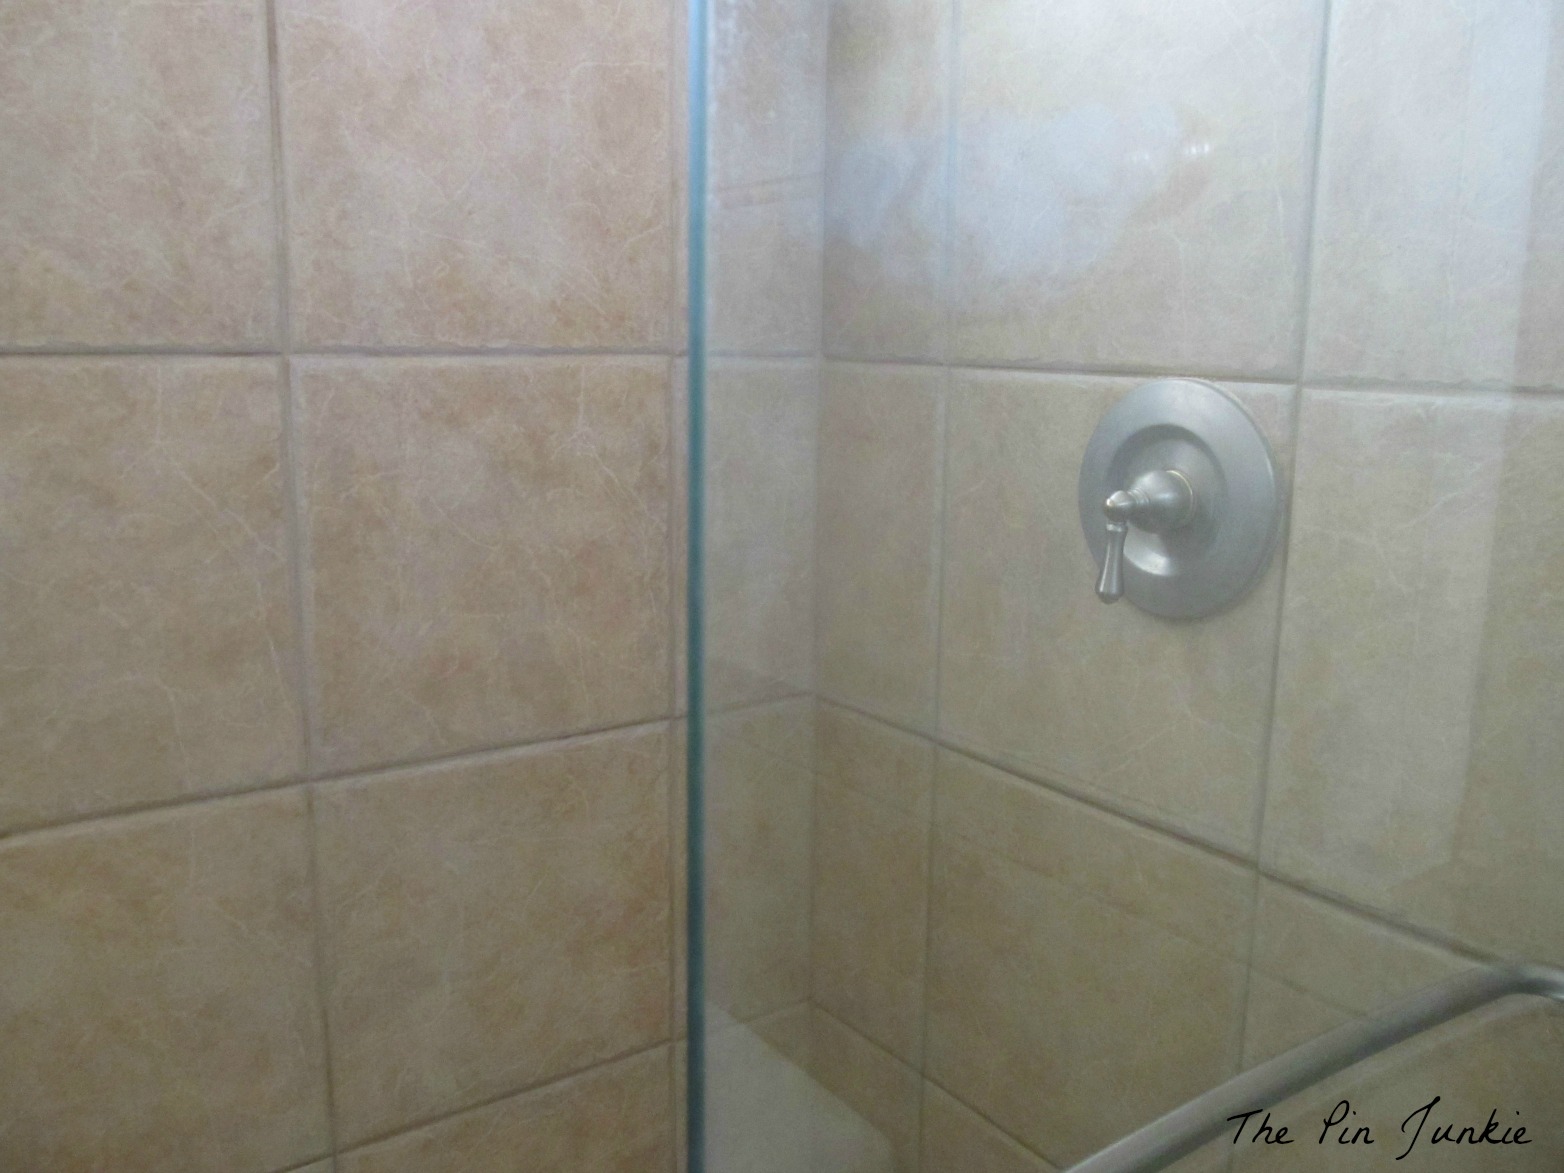 https://2.bp.blogspot.com/-axWwdwvTglI/UVZFljeYzpI/AAAAAAAACPI/dxbdAJzm6ow/s1600/clean+glass+shower+doors.jpg